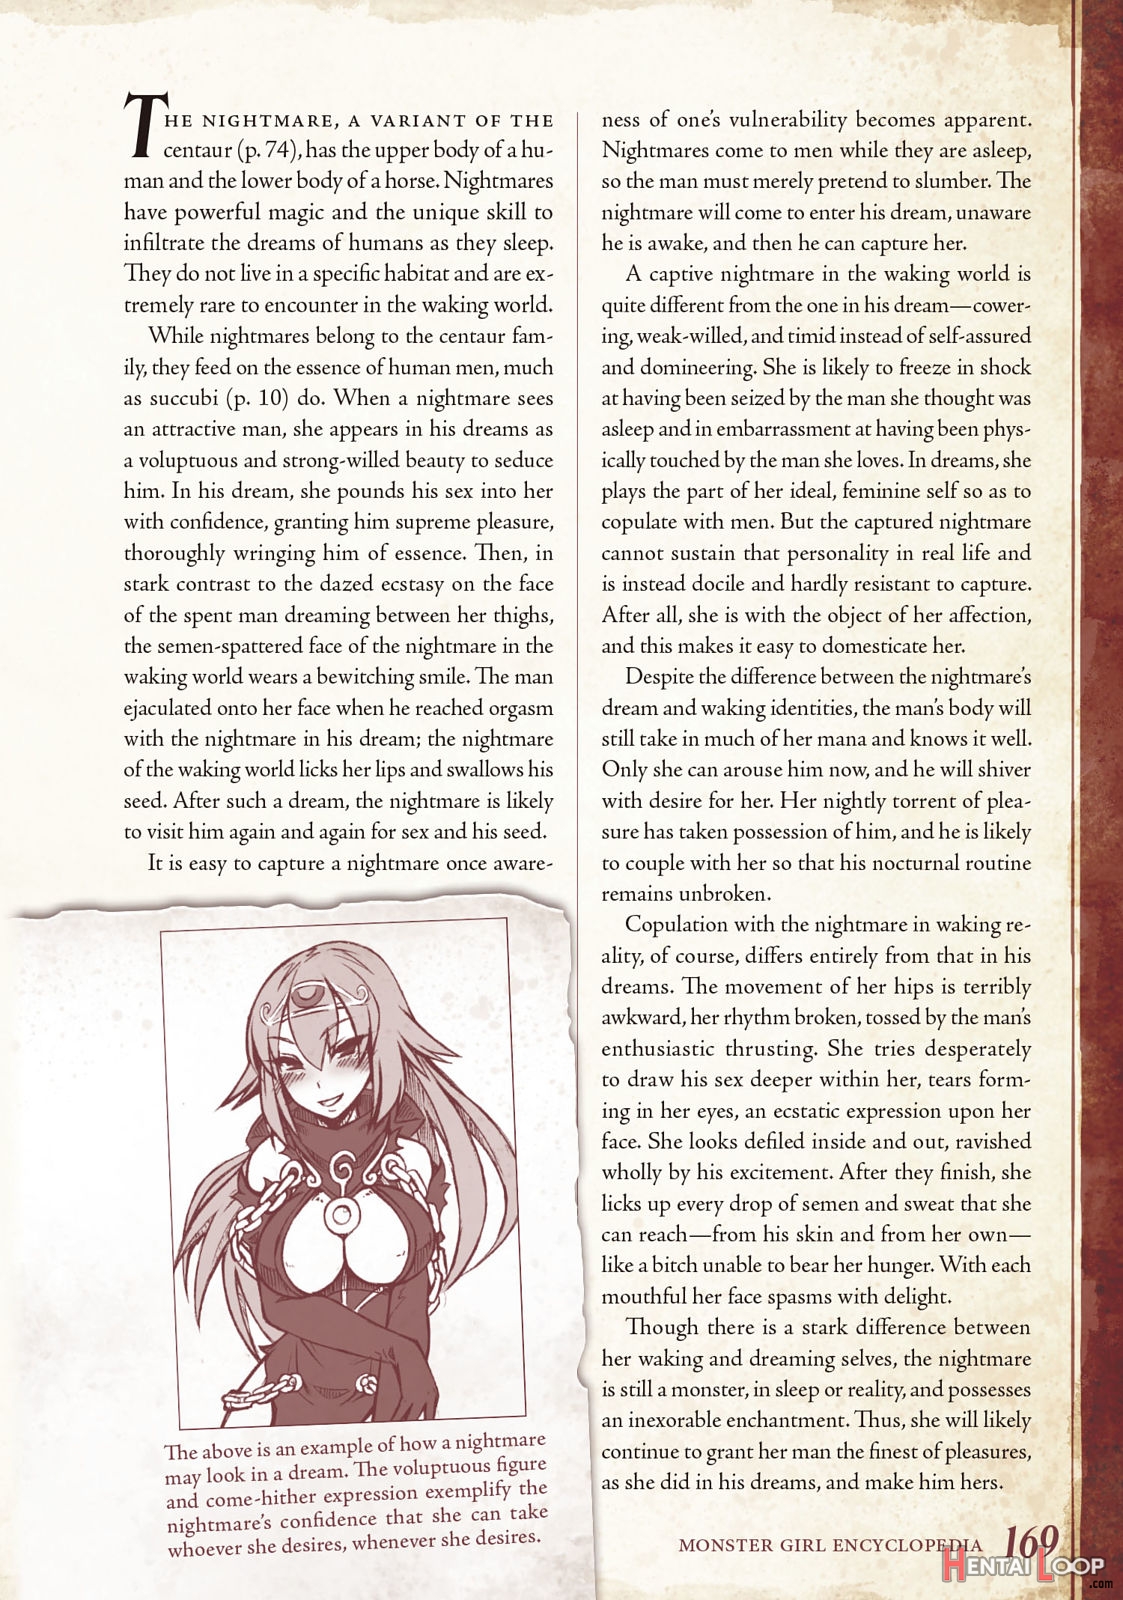 Monster Girl Encyclopedia Vol. 1 page 170